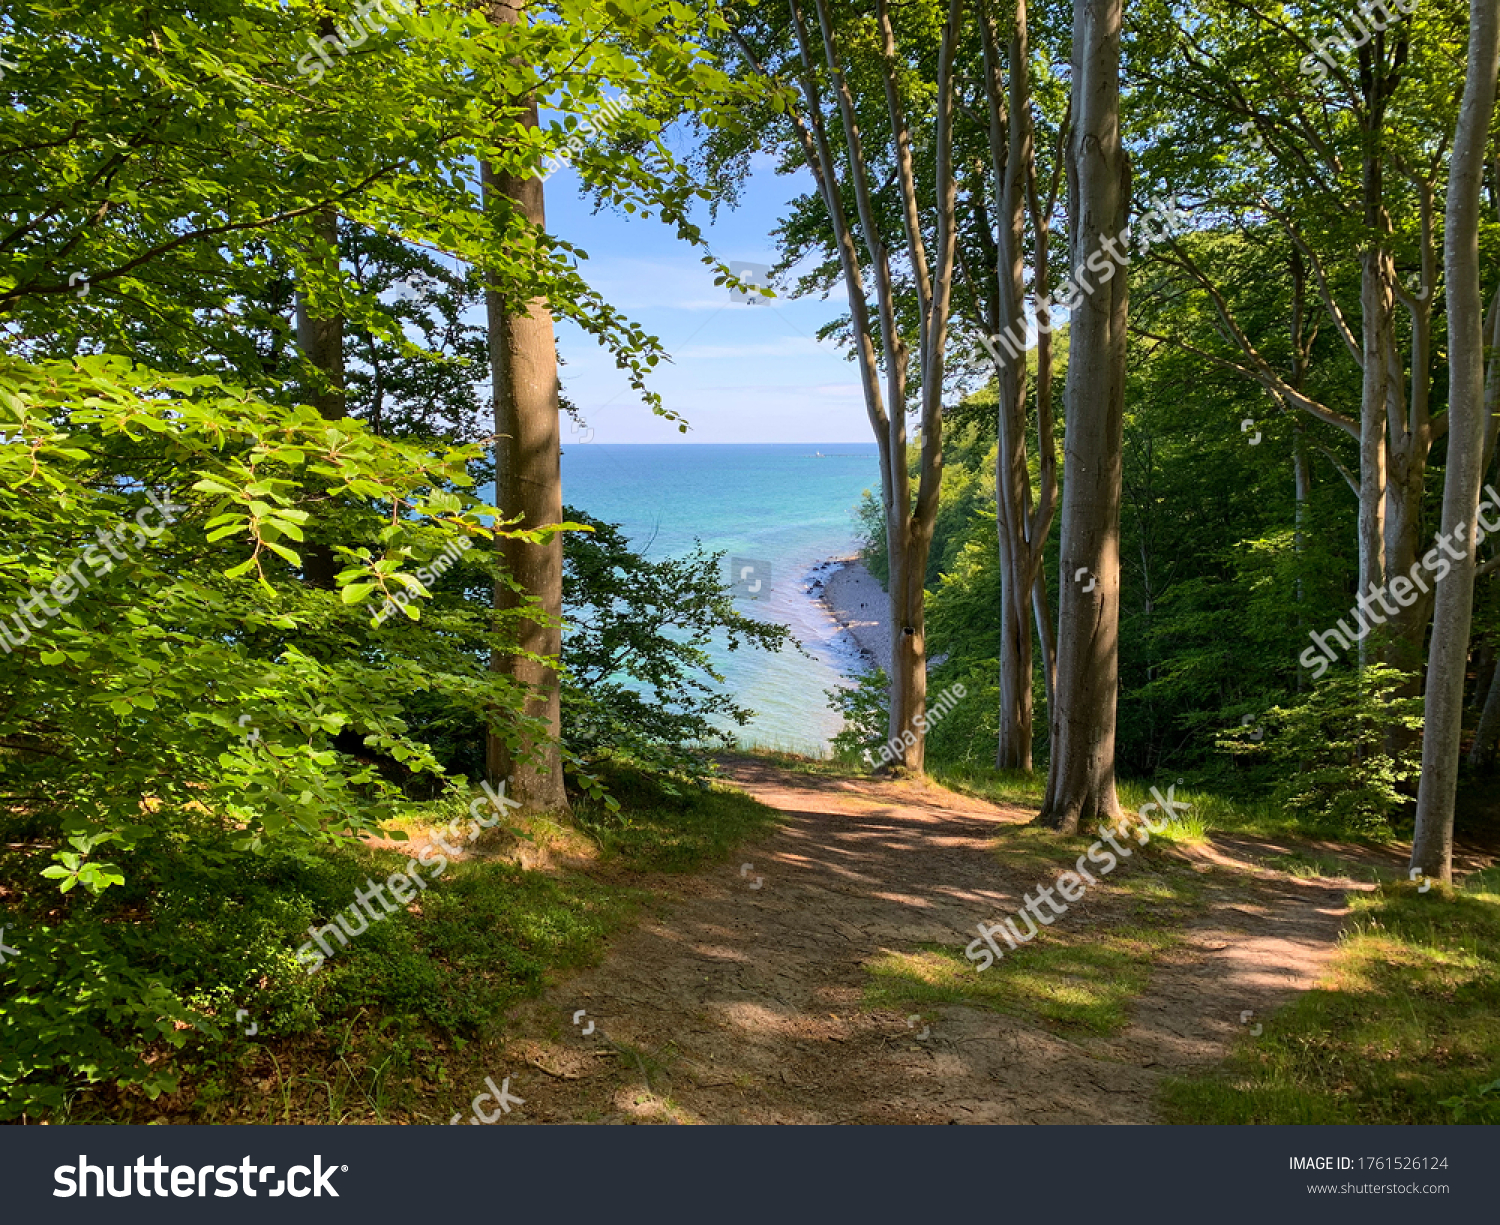 Beautiful park forest landscape with beech trees on the Baltic sea coast on resort island Ruegen, Germany #1761526124